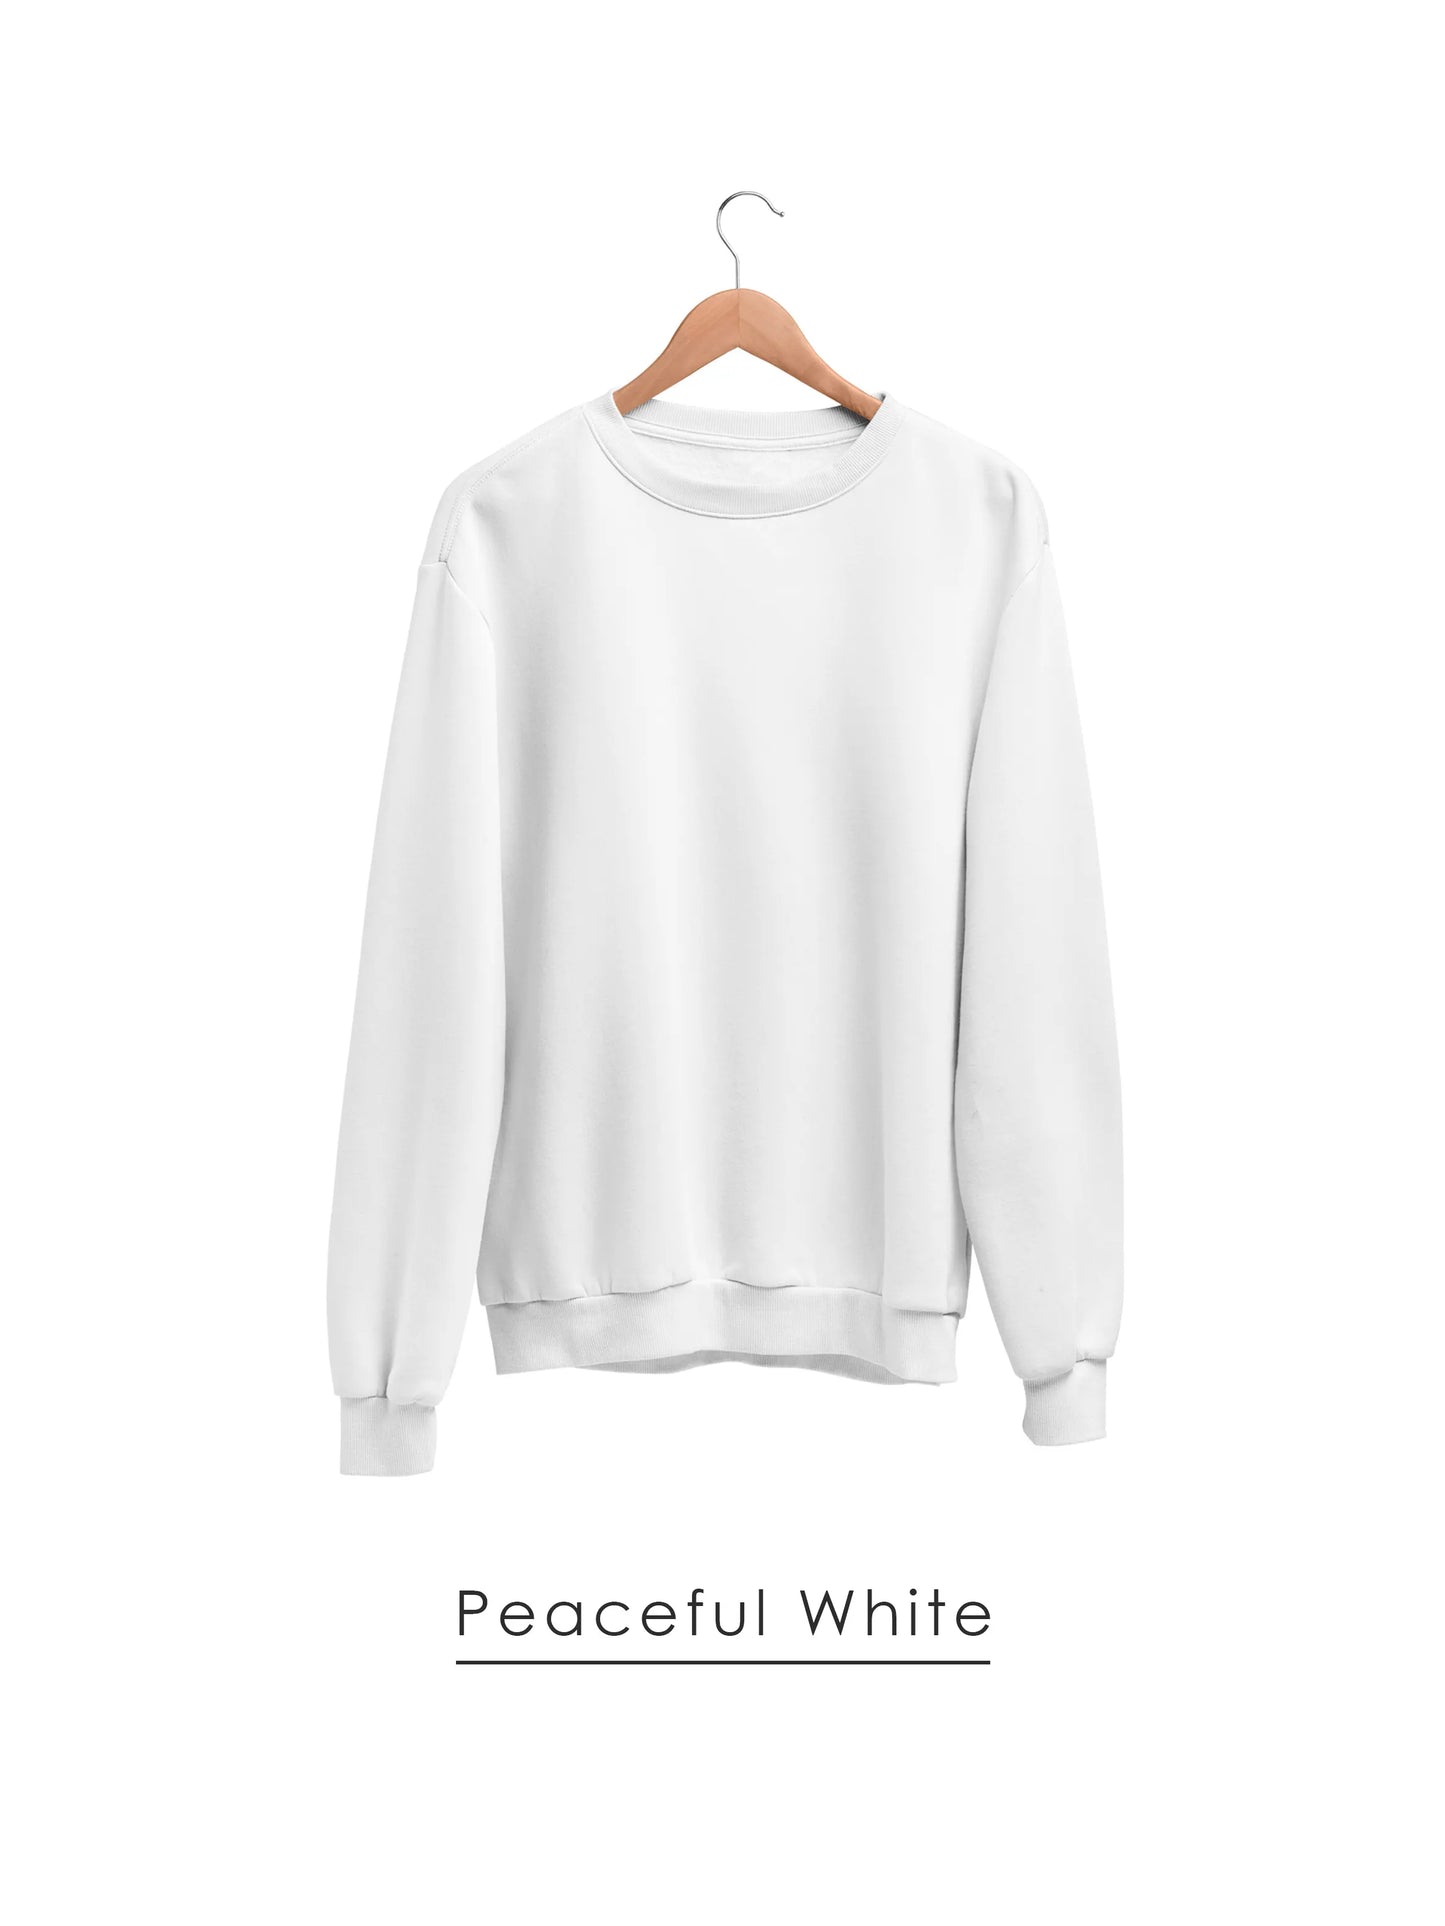 Pick Any 3 - Plain Sweatshirt Combo